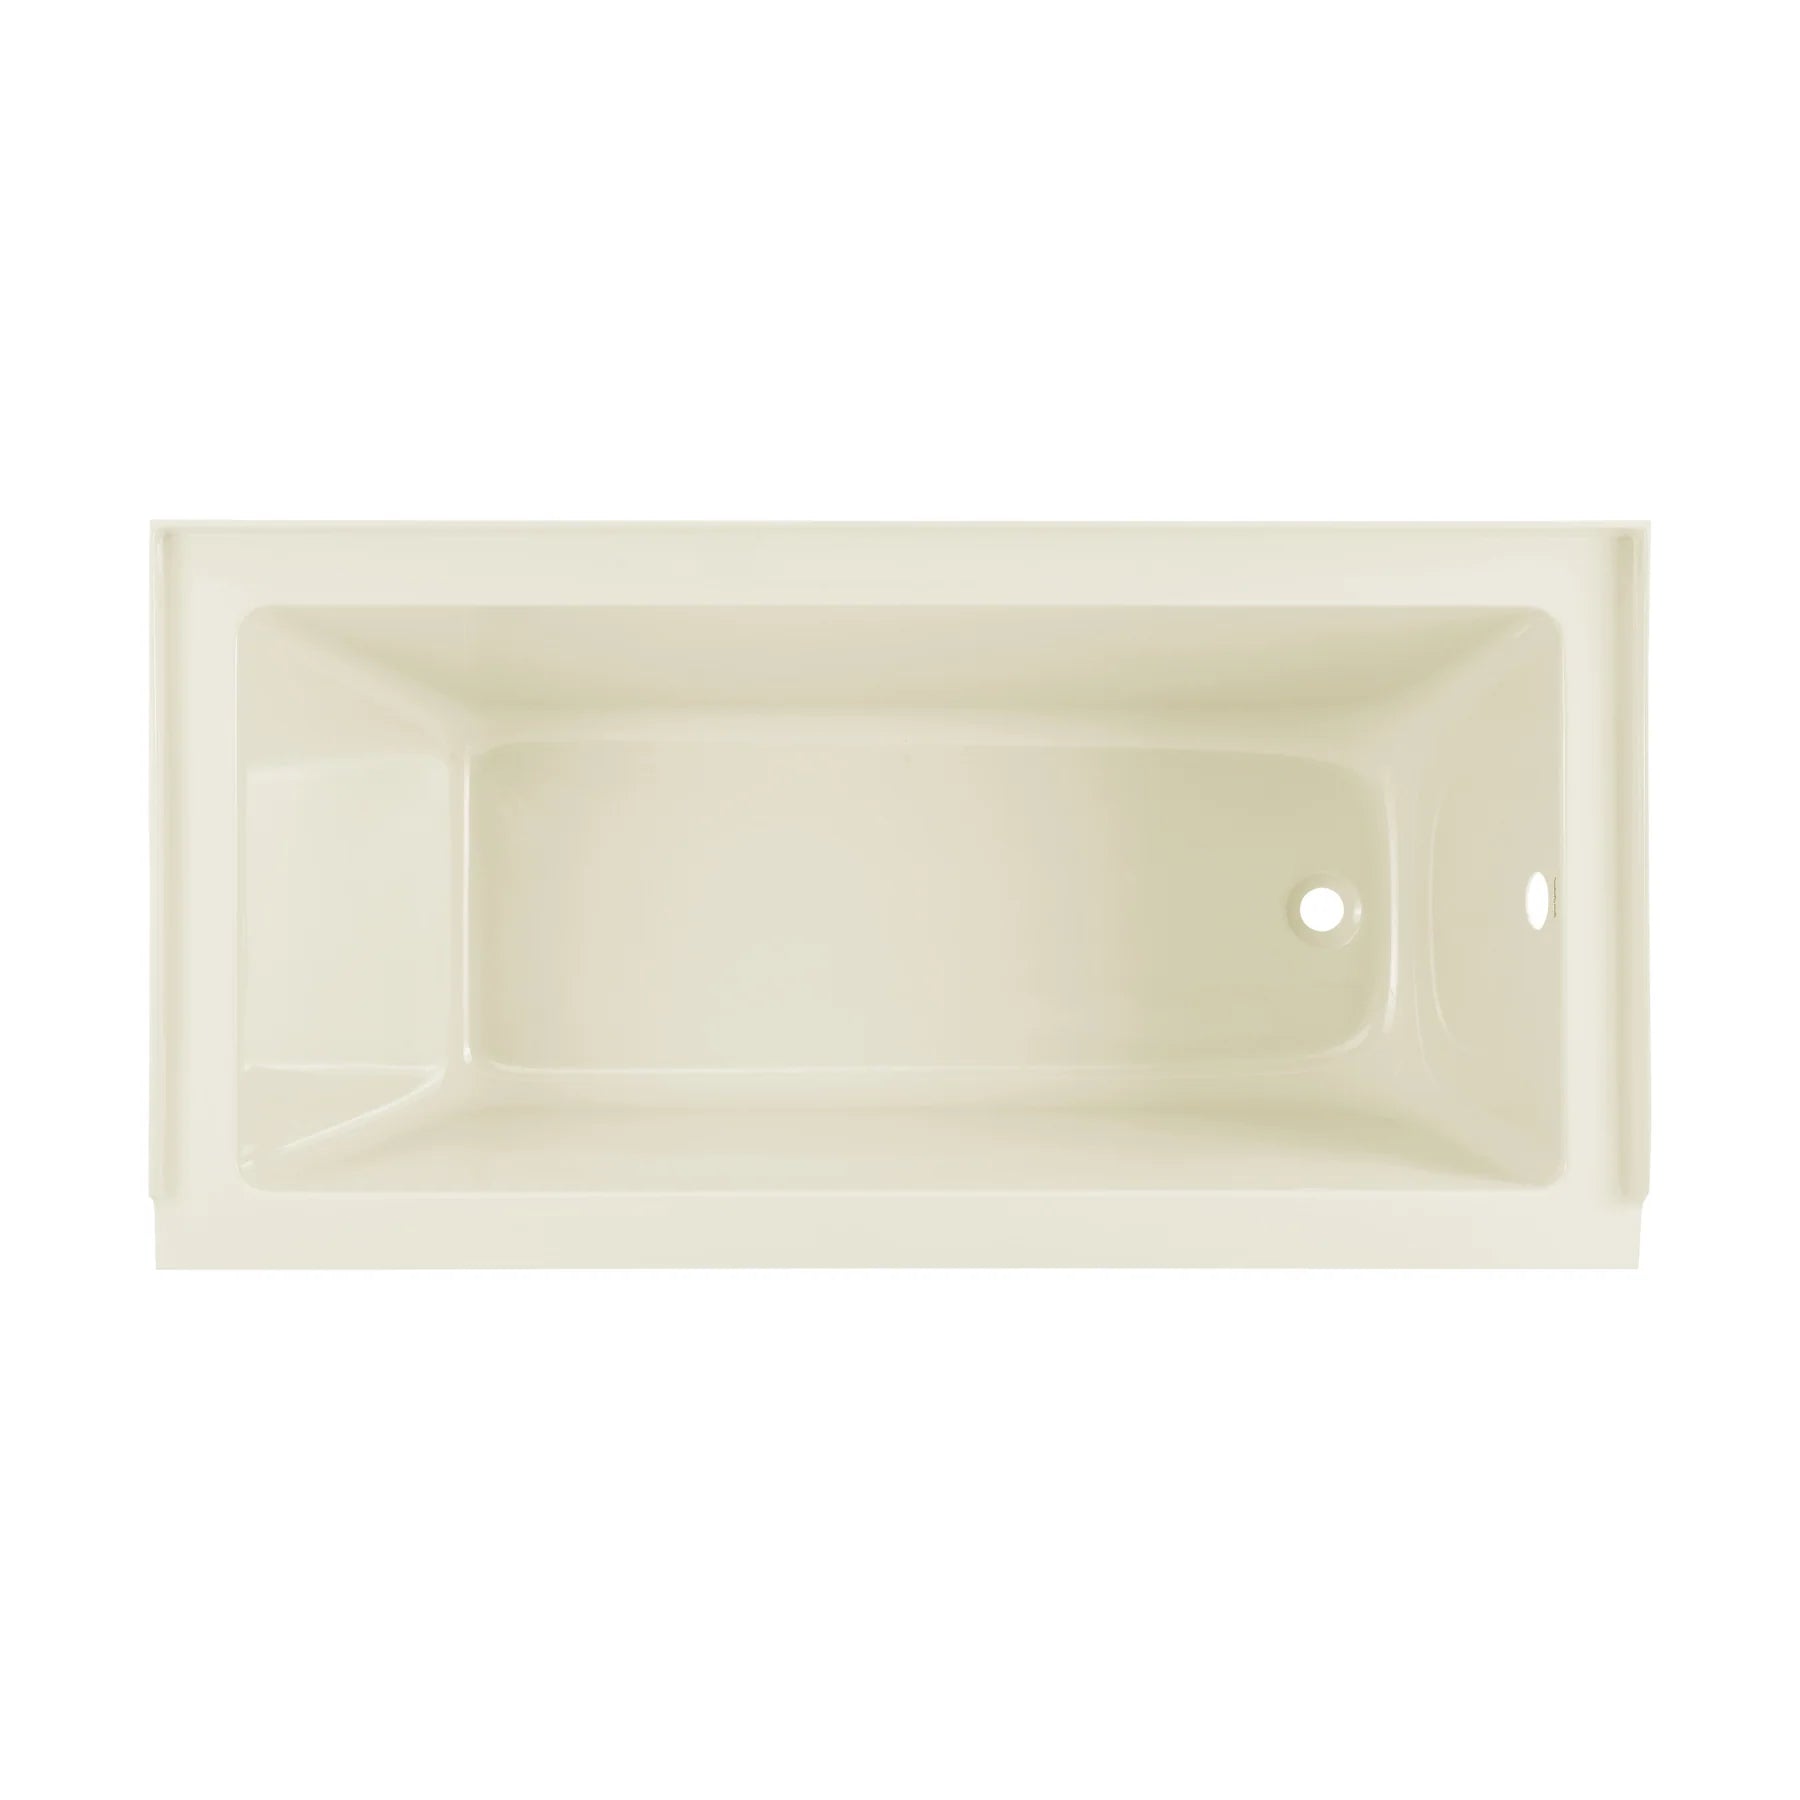 Swiss Madison Voltaire 60" X 30" Right-Hand Drain Alcove Bathtub in Bisque - SM-DB560BQ